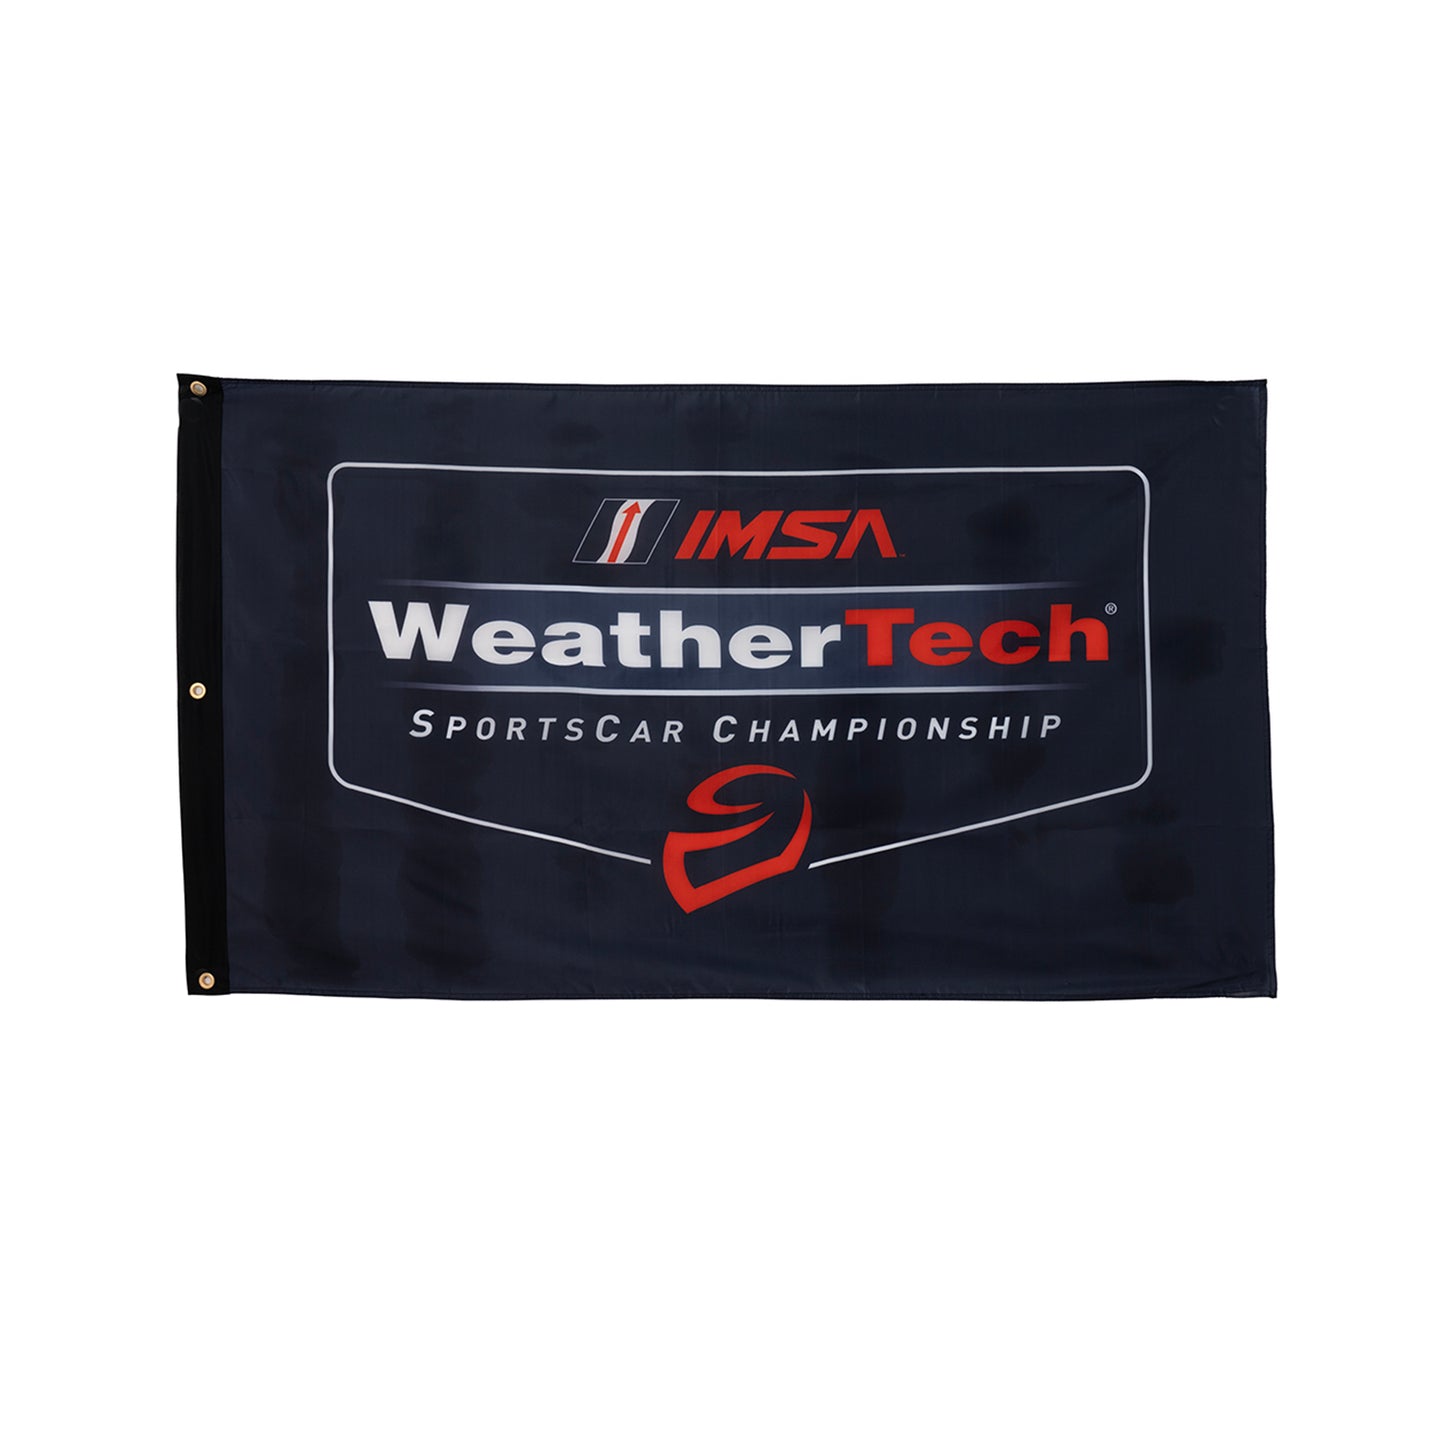 WeatherTech 3x5 Flag - Black